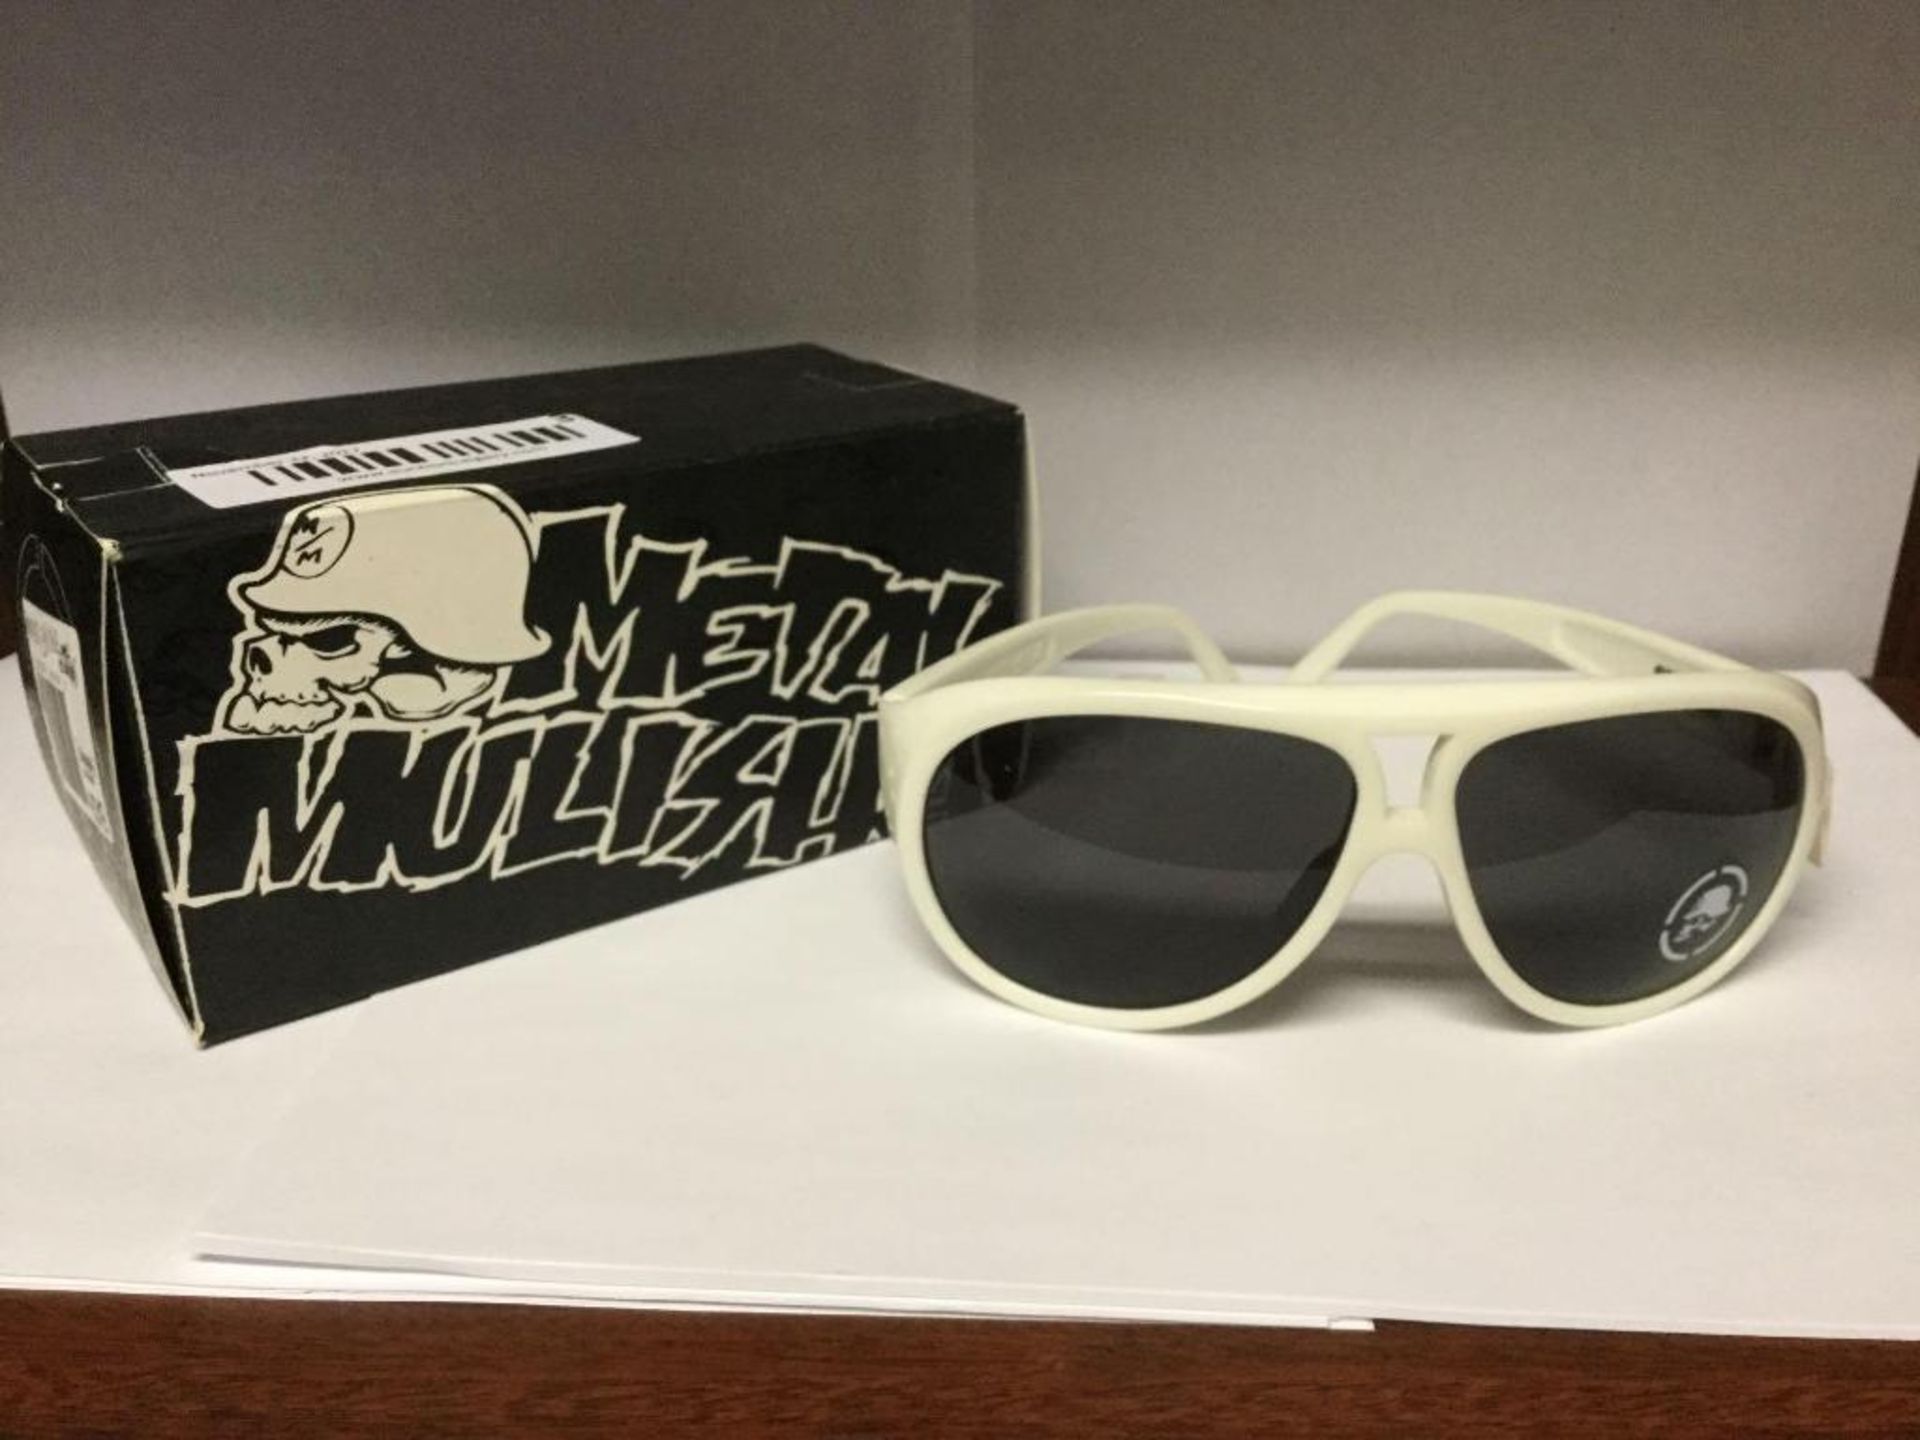 Metal Mulisha Sunglasses with box and bag - Value 165